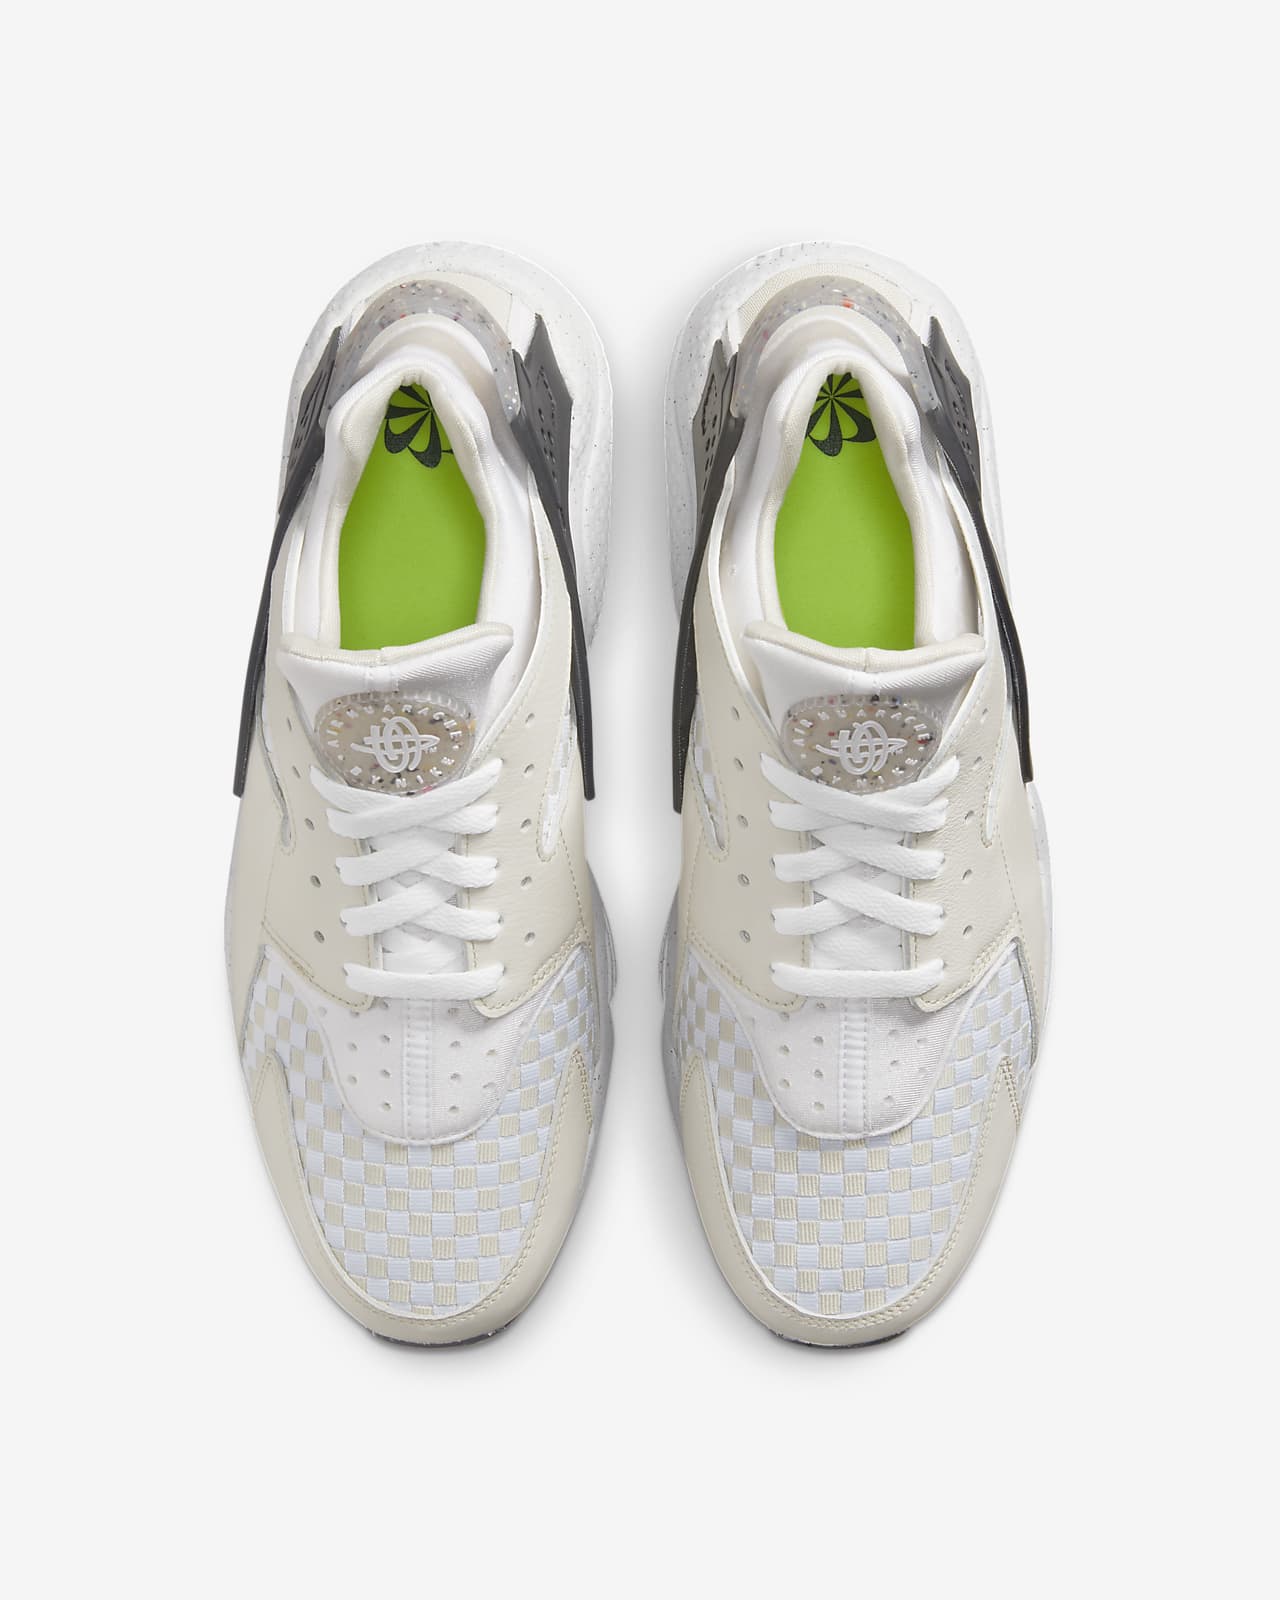 encima Respecto a Estrictamente Nike Air Huarache Crater Premium Men's Shoes. Nike.com